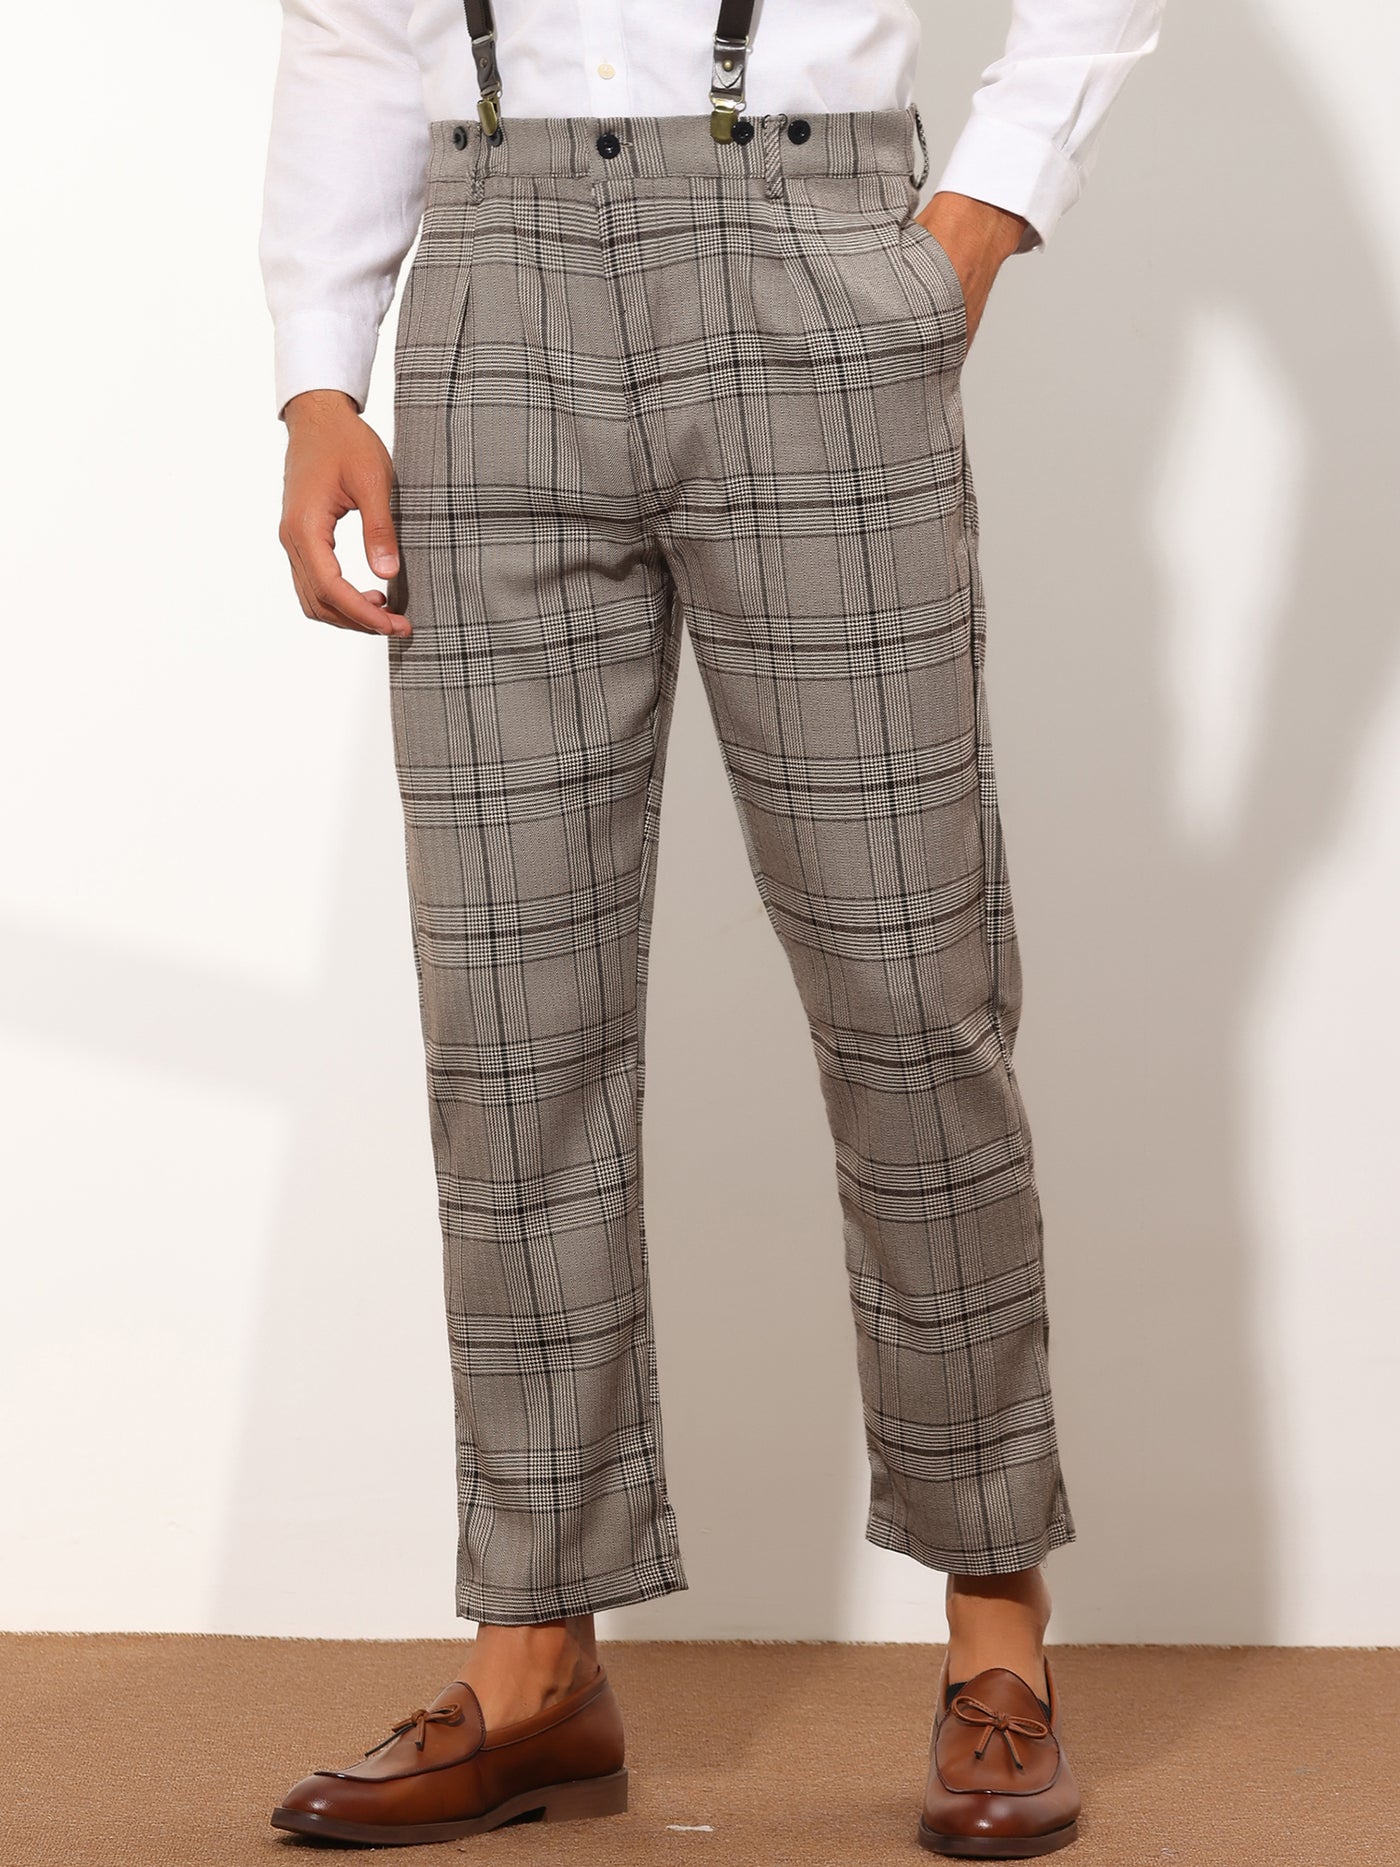 Bublédon Men's Checked Business Plaid Dress Pants with Suspenders